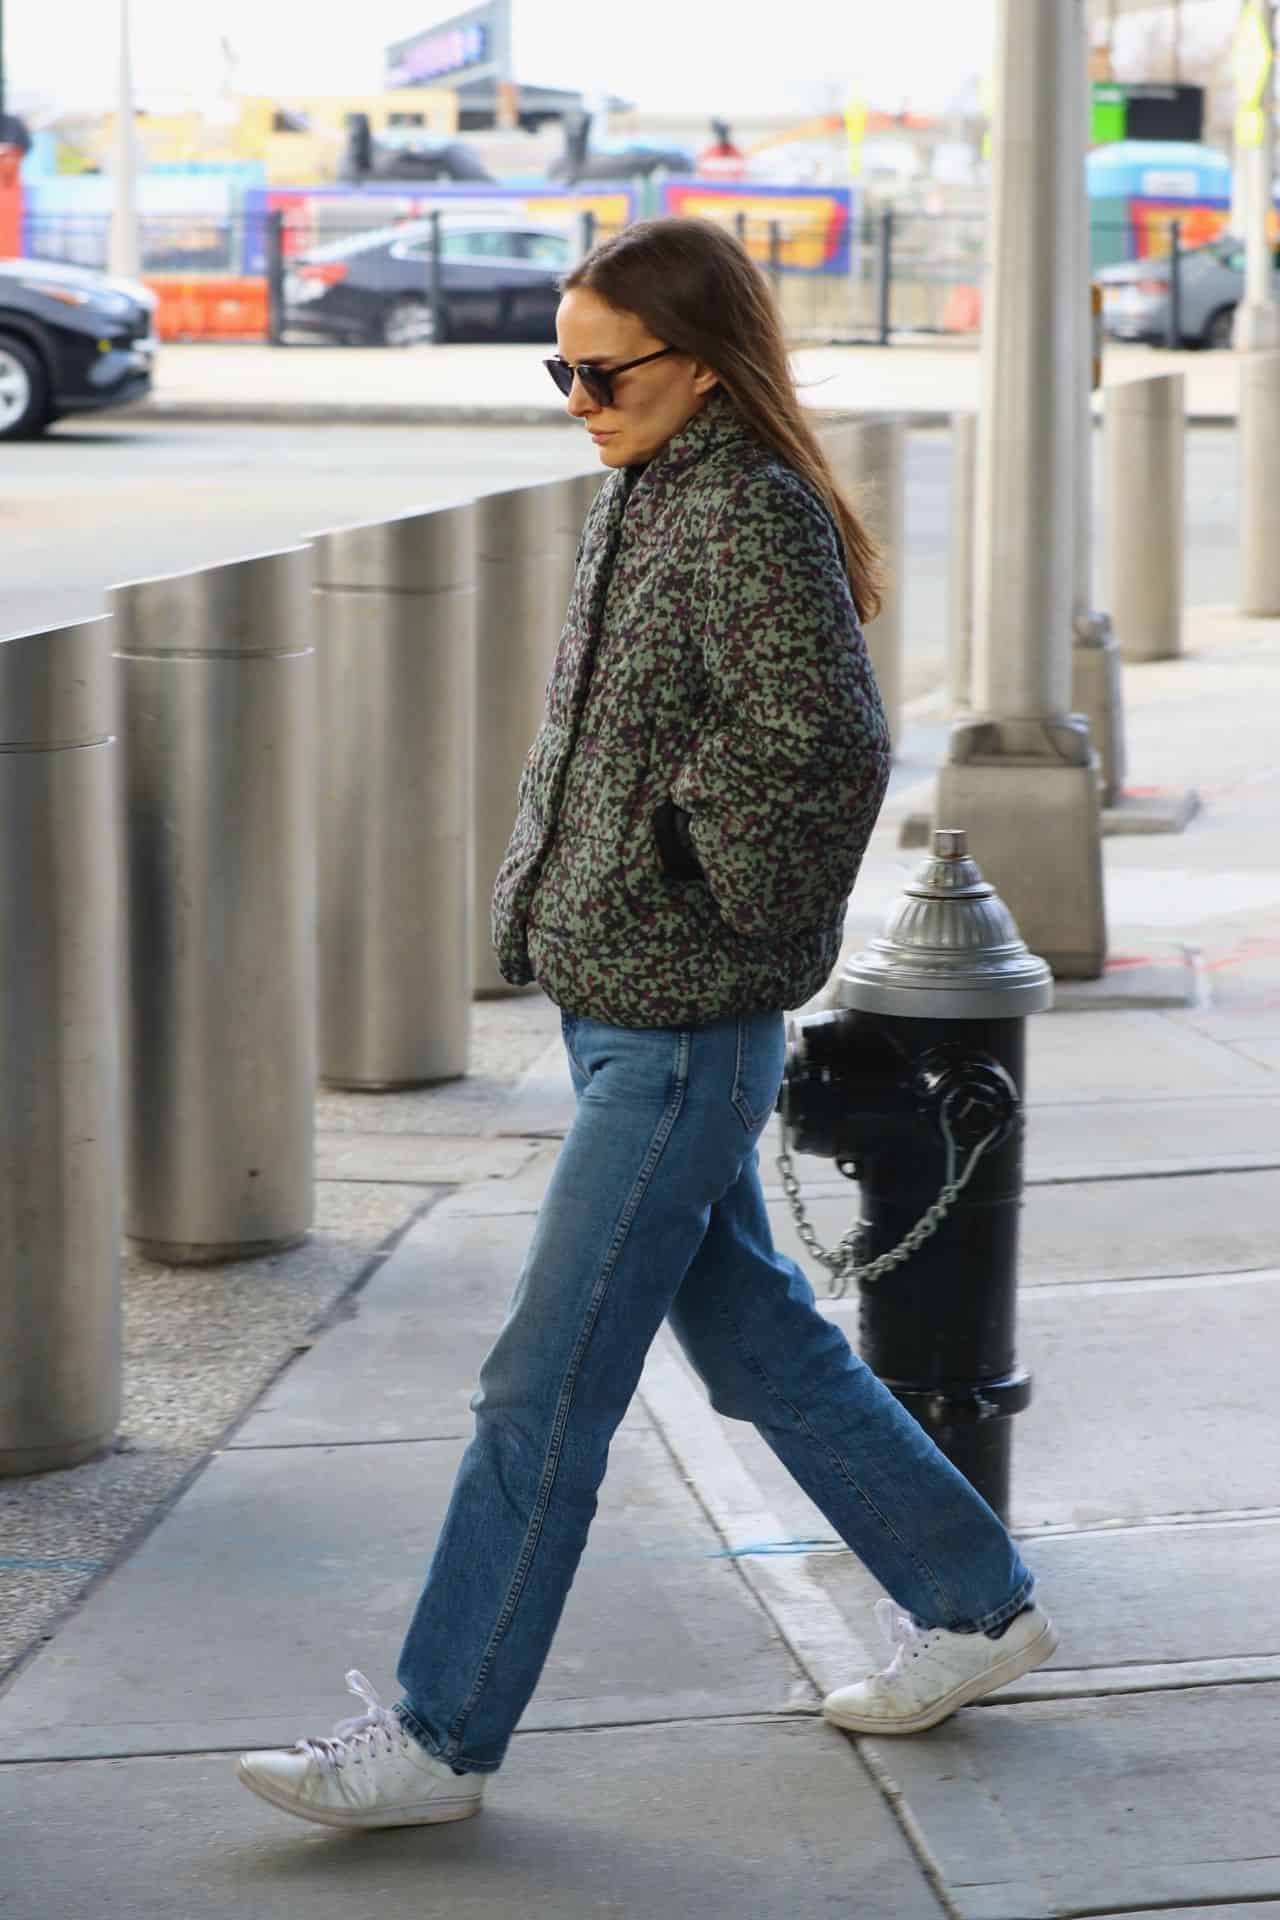 Natalie Portman Embraces City Style as She Lands at JFK Airport